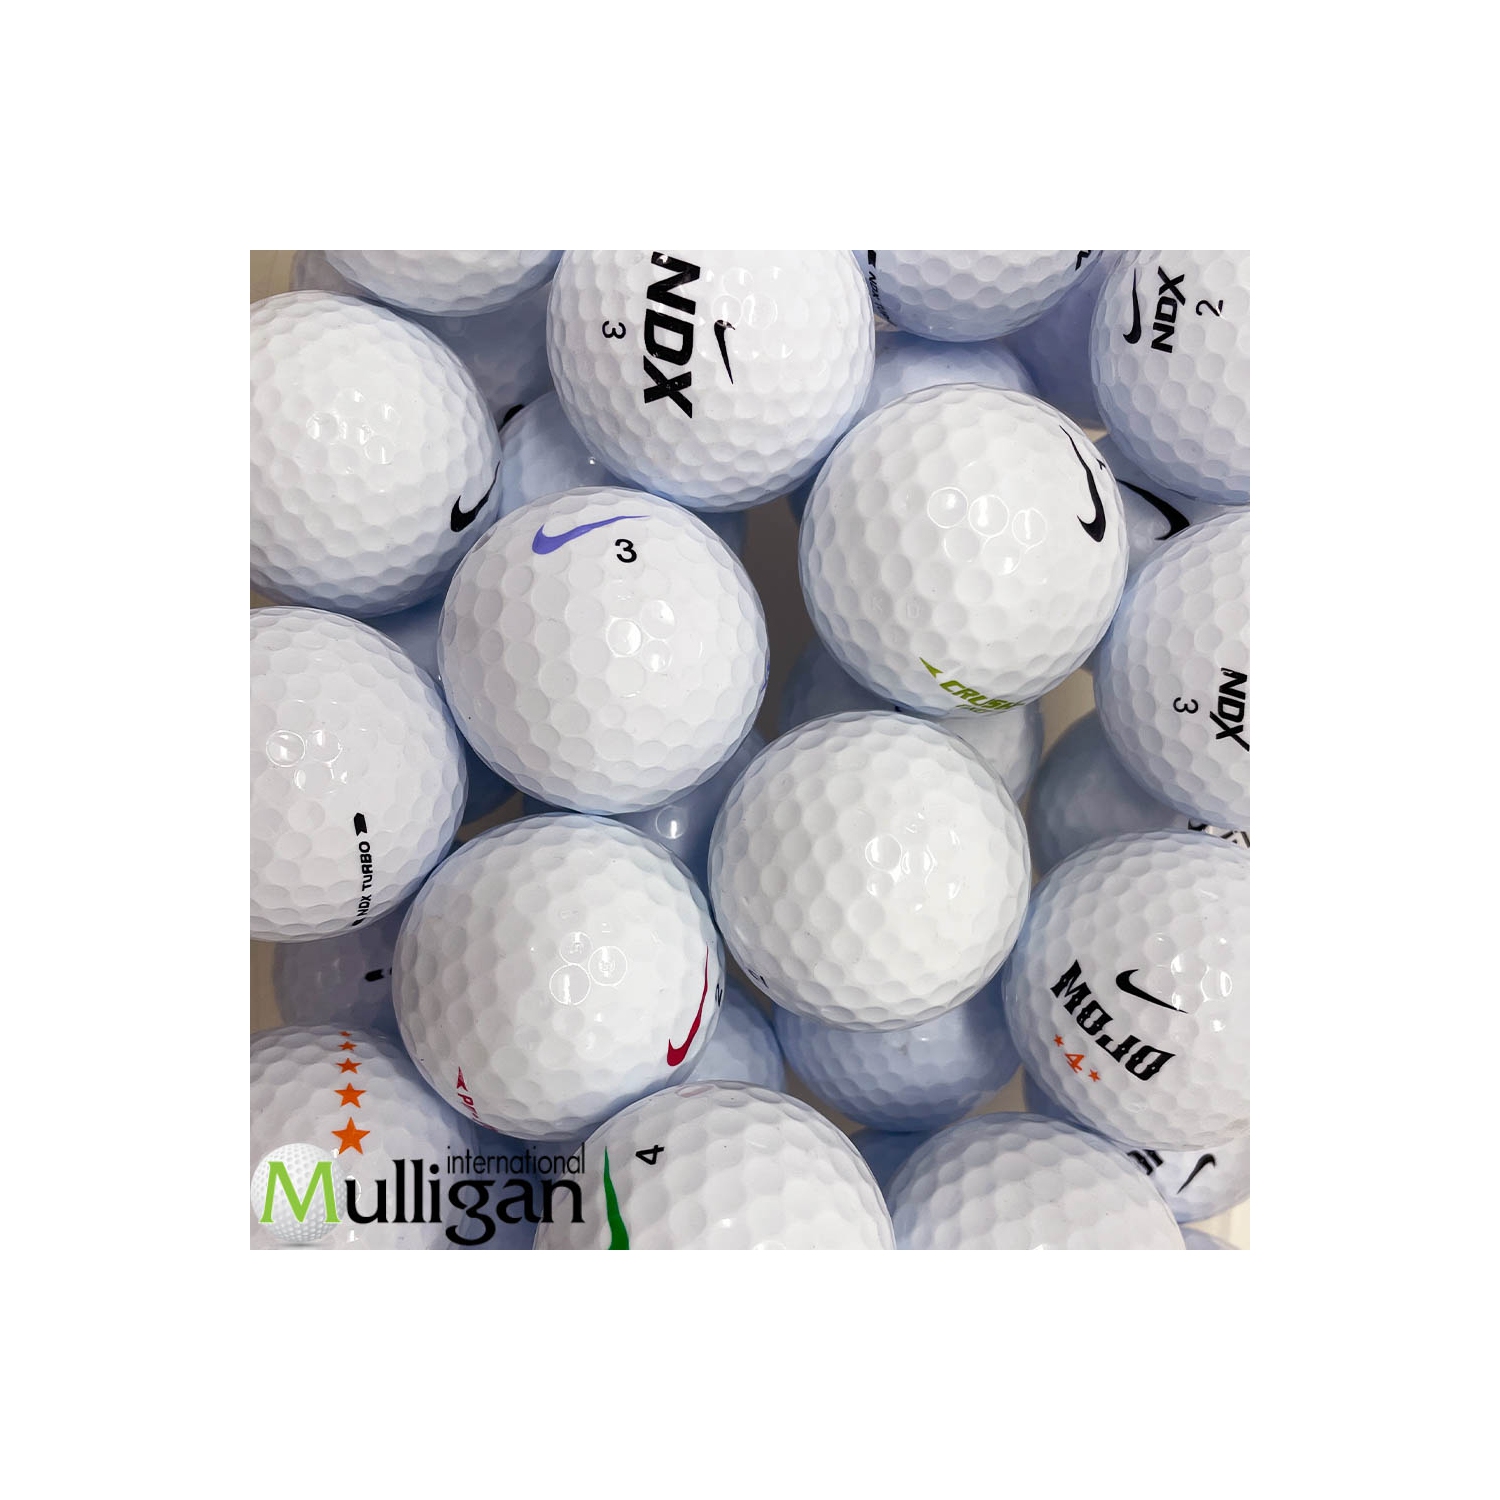 Mulligan Golf Balls 48 White Nike 5A Recycled Used Golf Balls